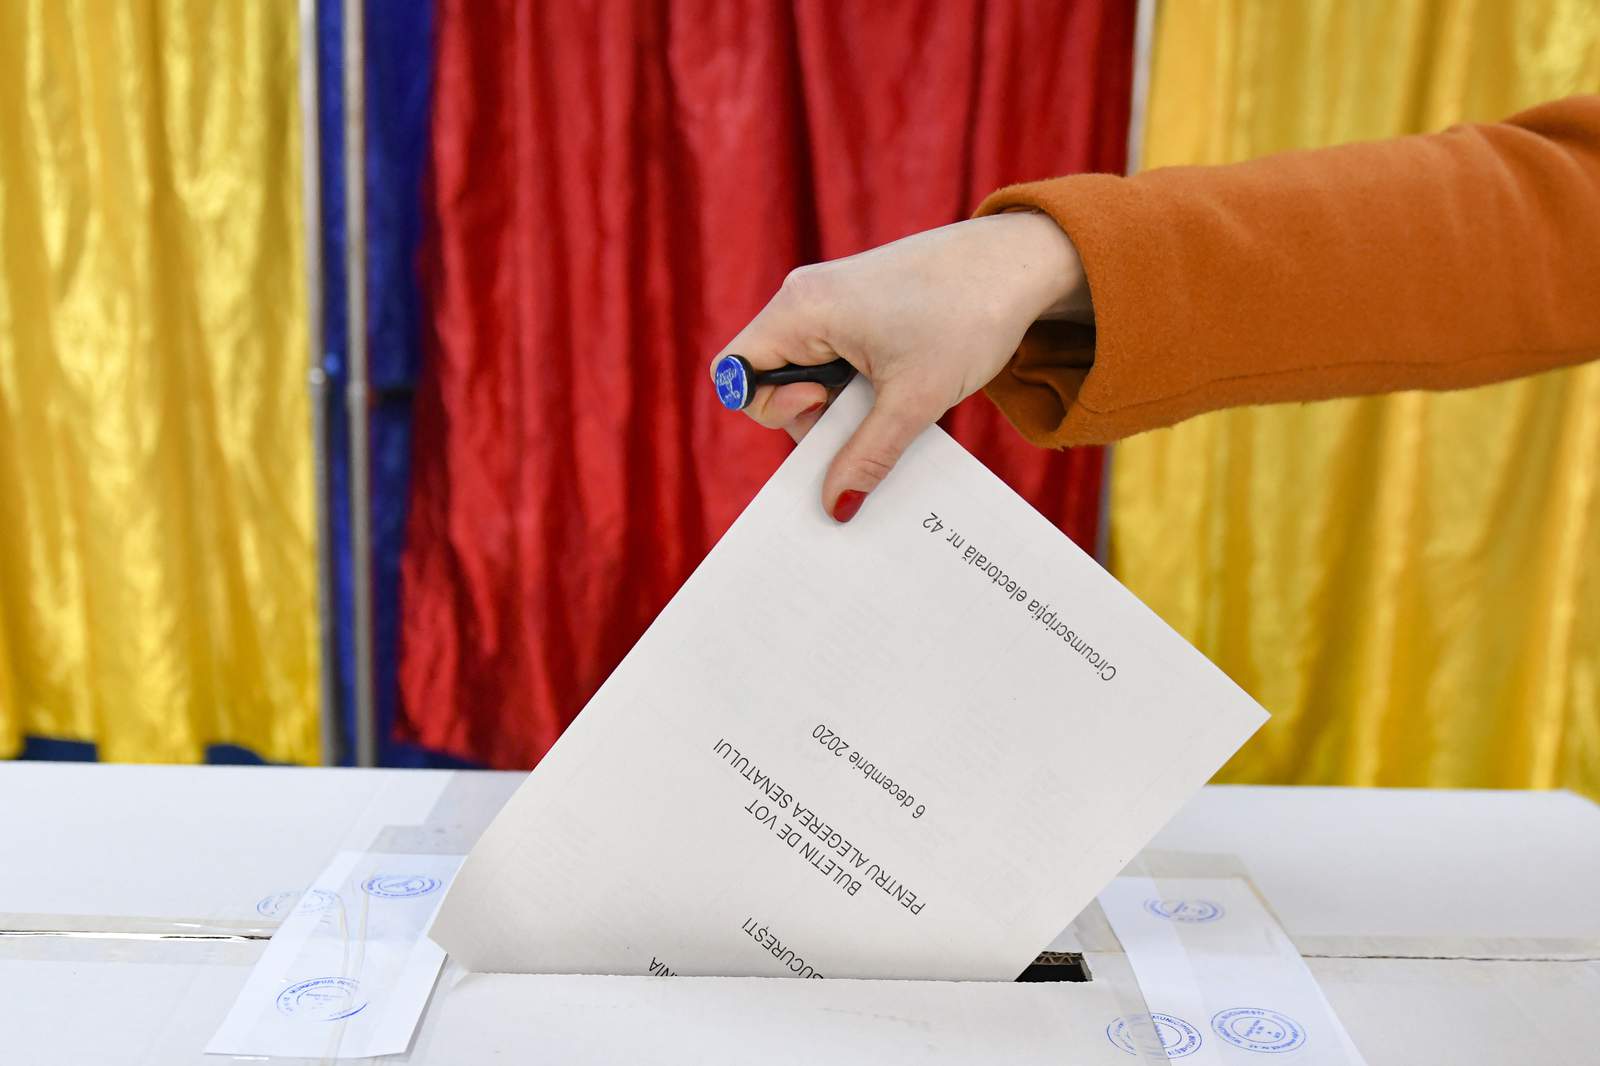 Romanians elect new lawmakers, seek end to political turmoil